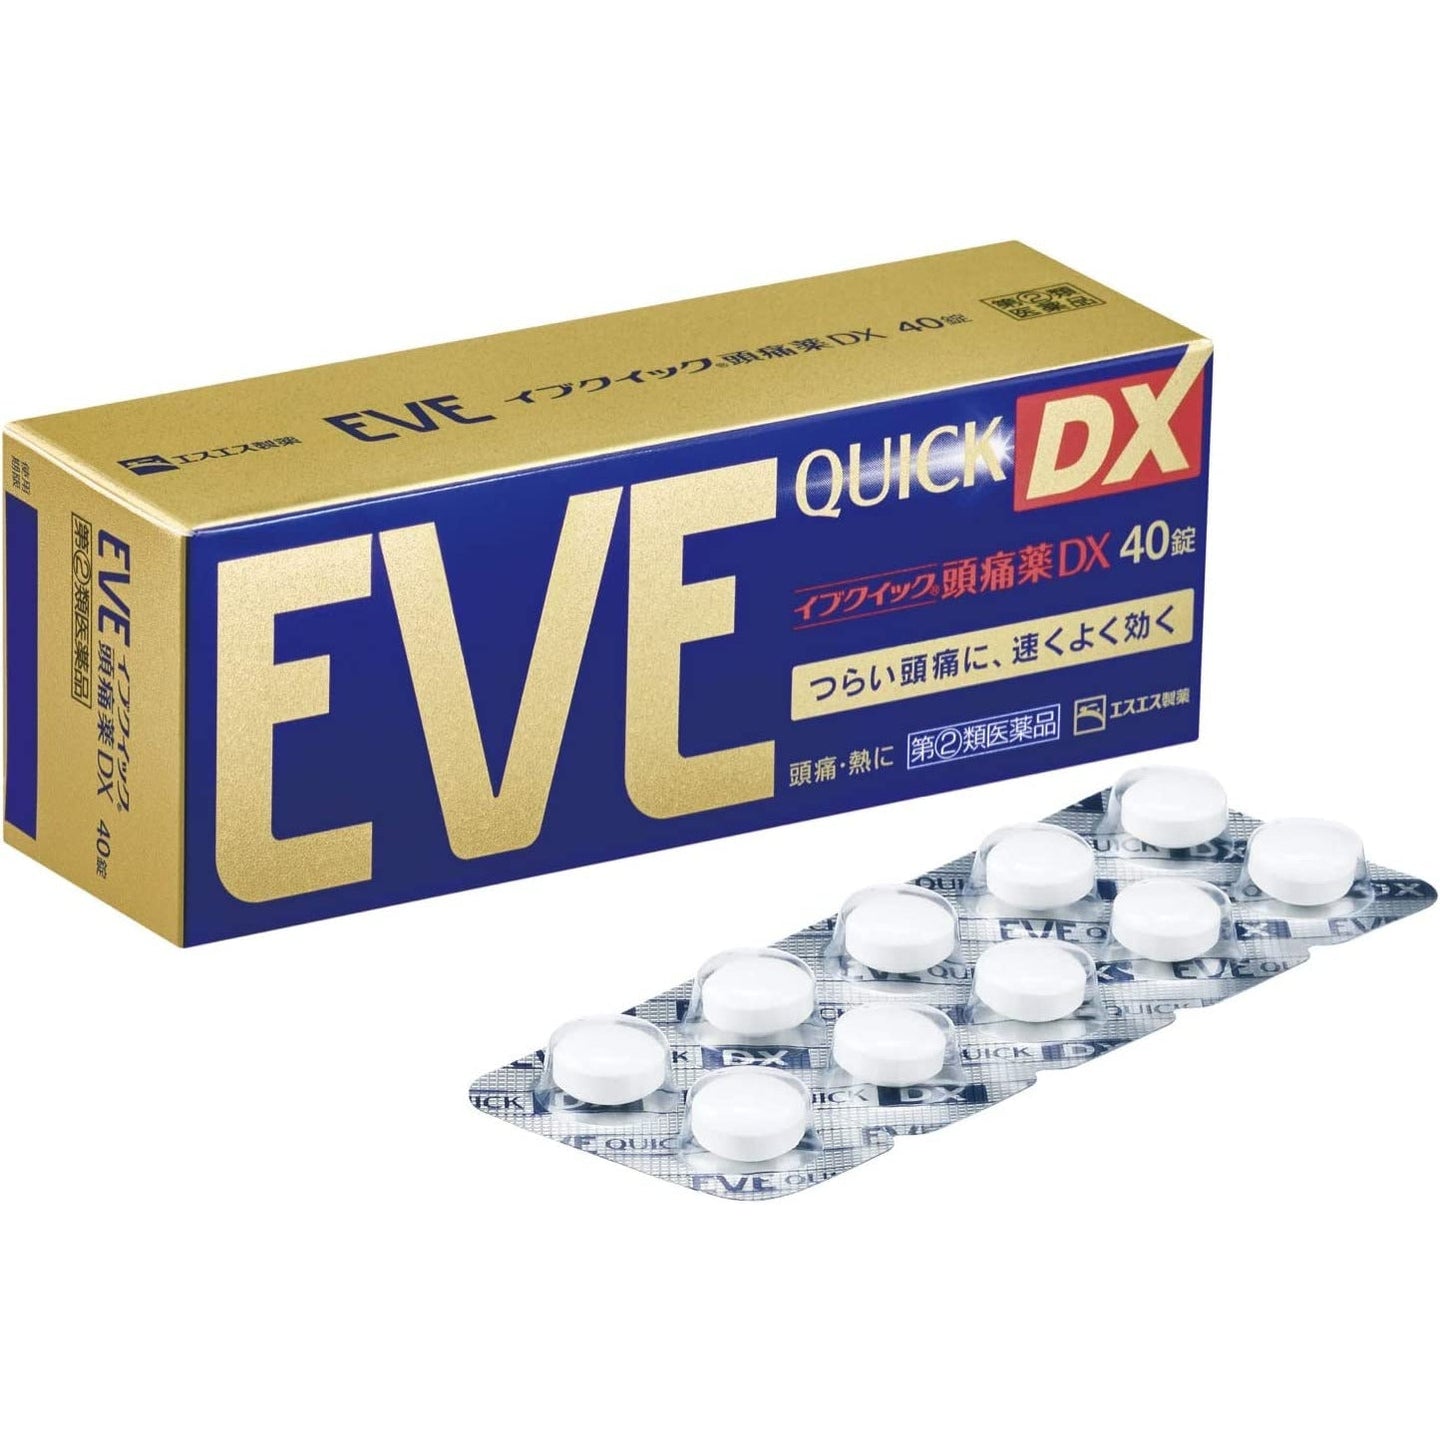 SS製藥 白兔牌 EVE QUICK DX 速效頭痛藥